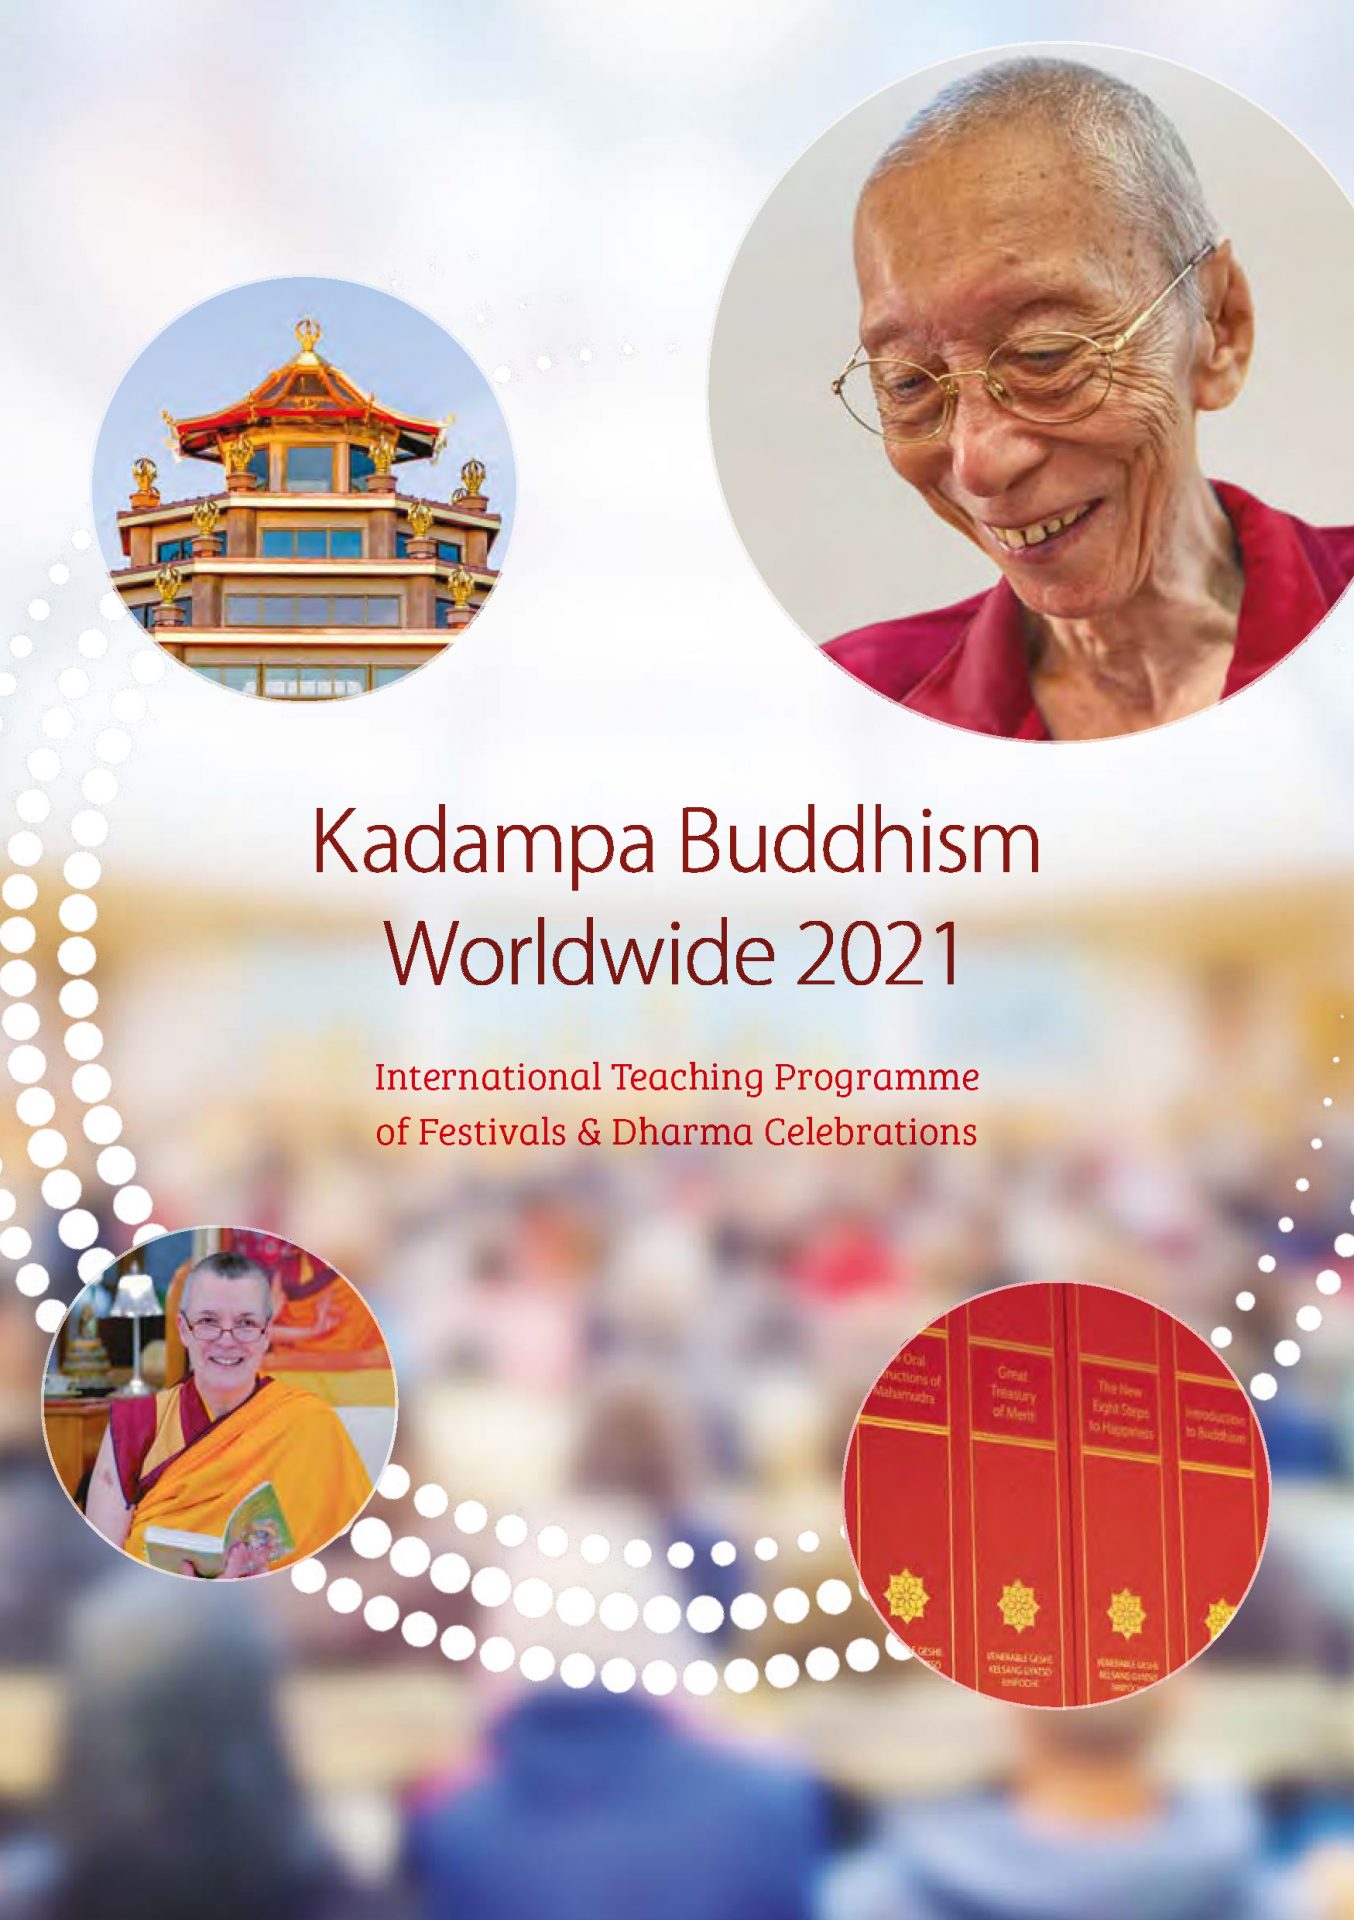 Kadampa Buddhism Worldwide 2021 brochure